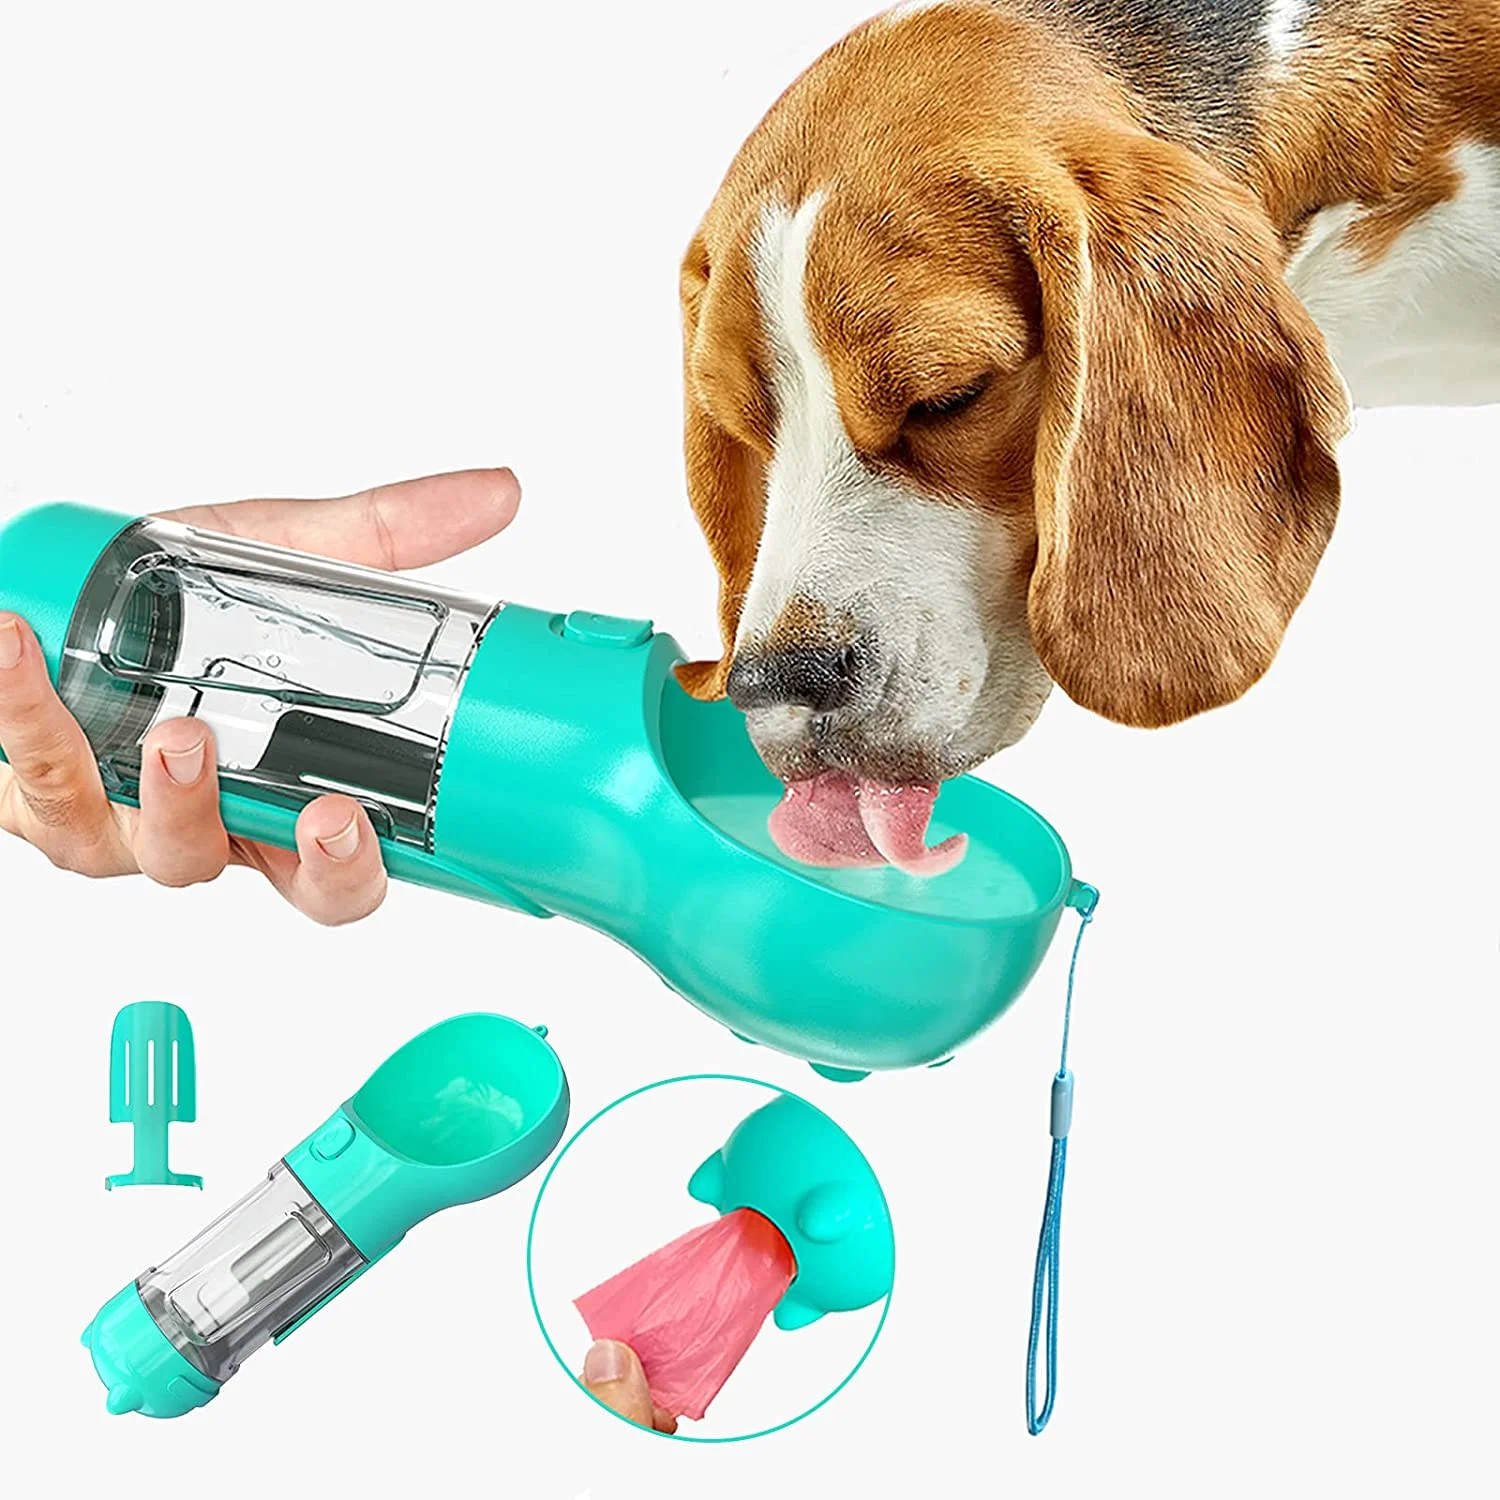 

Multifunctional 300ml Portable Outdoor Travel Dog Drinking Bowl Pet Feeding Water Bottle With Food Box, Pink,green,blue,orange